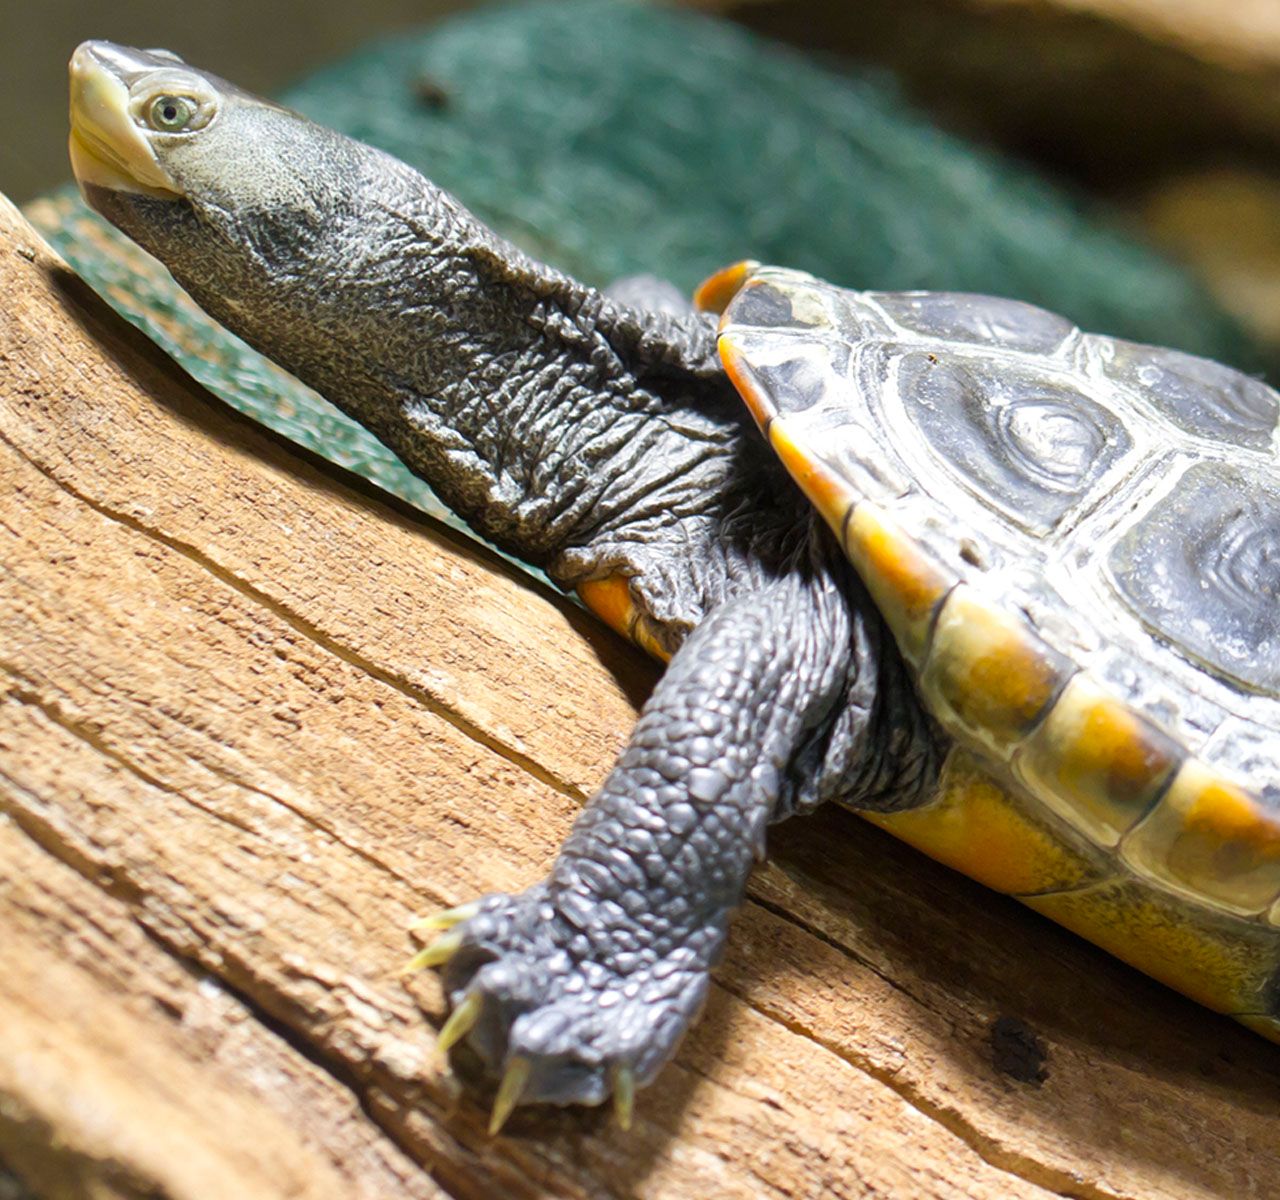 How to Take Care of an Aquatic Turtle: Habitat & Food